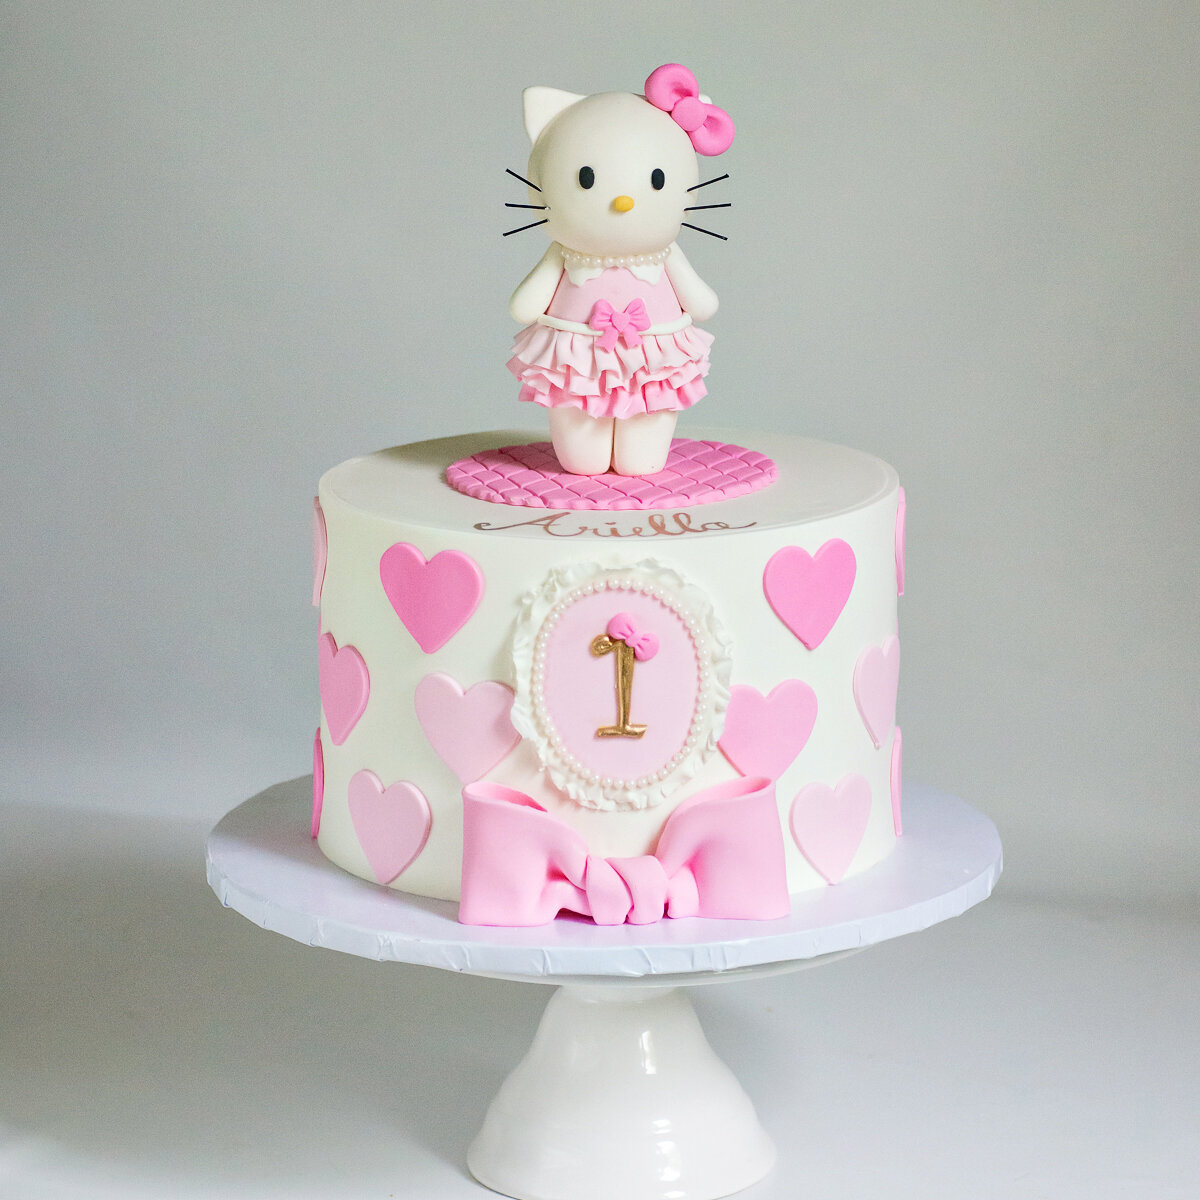 Buy Hello Kitty Fondant Cake| Online Cake Delivery - CakeBee